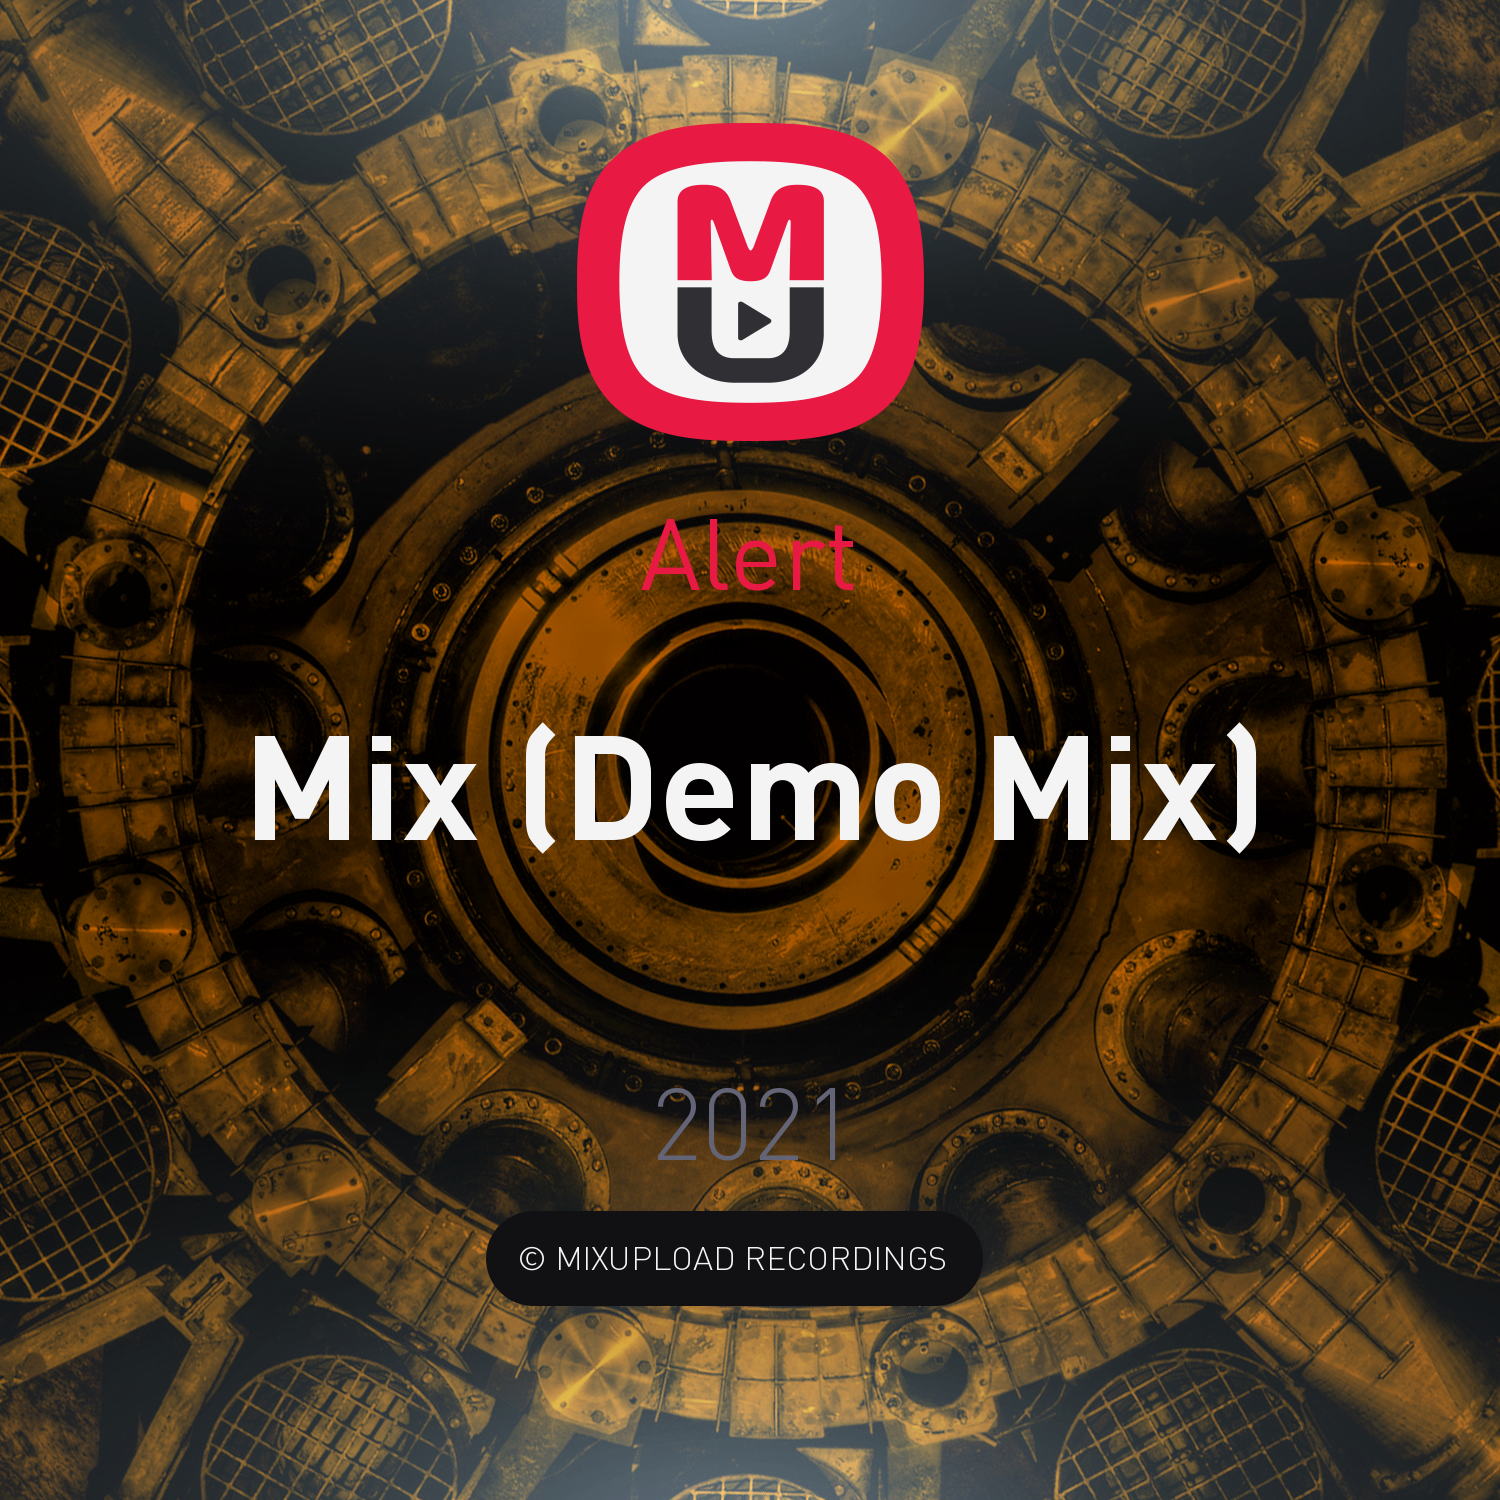 Demo mix